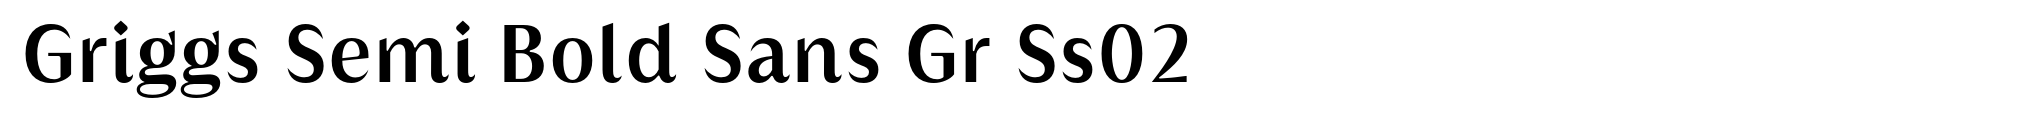 Griggs Semi Bold Sans Gr Ss02 image